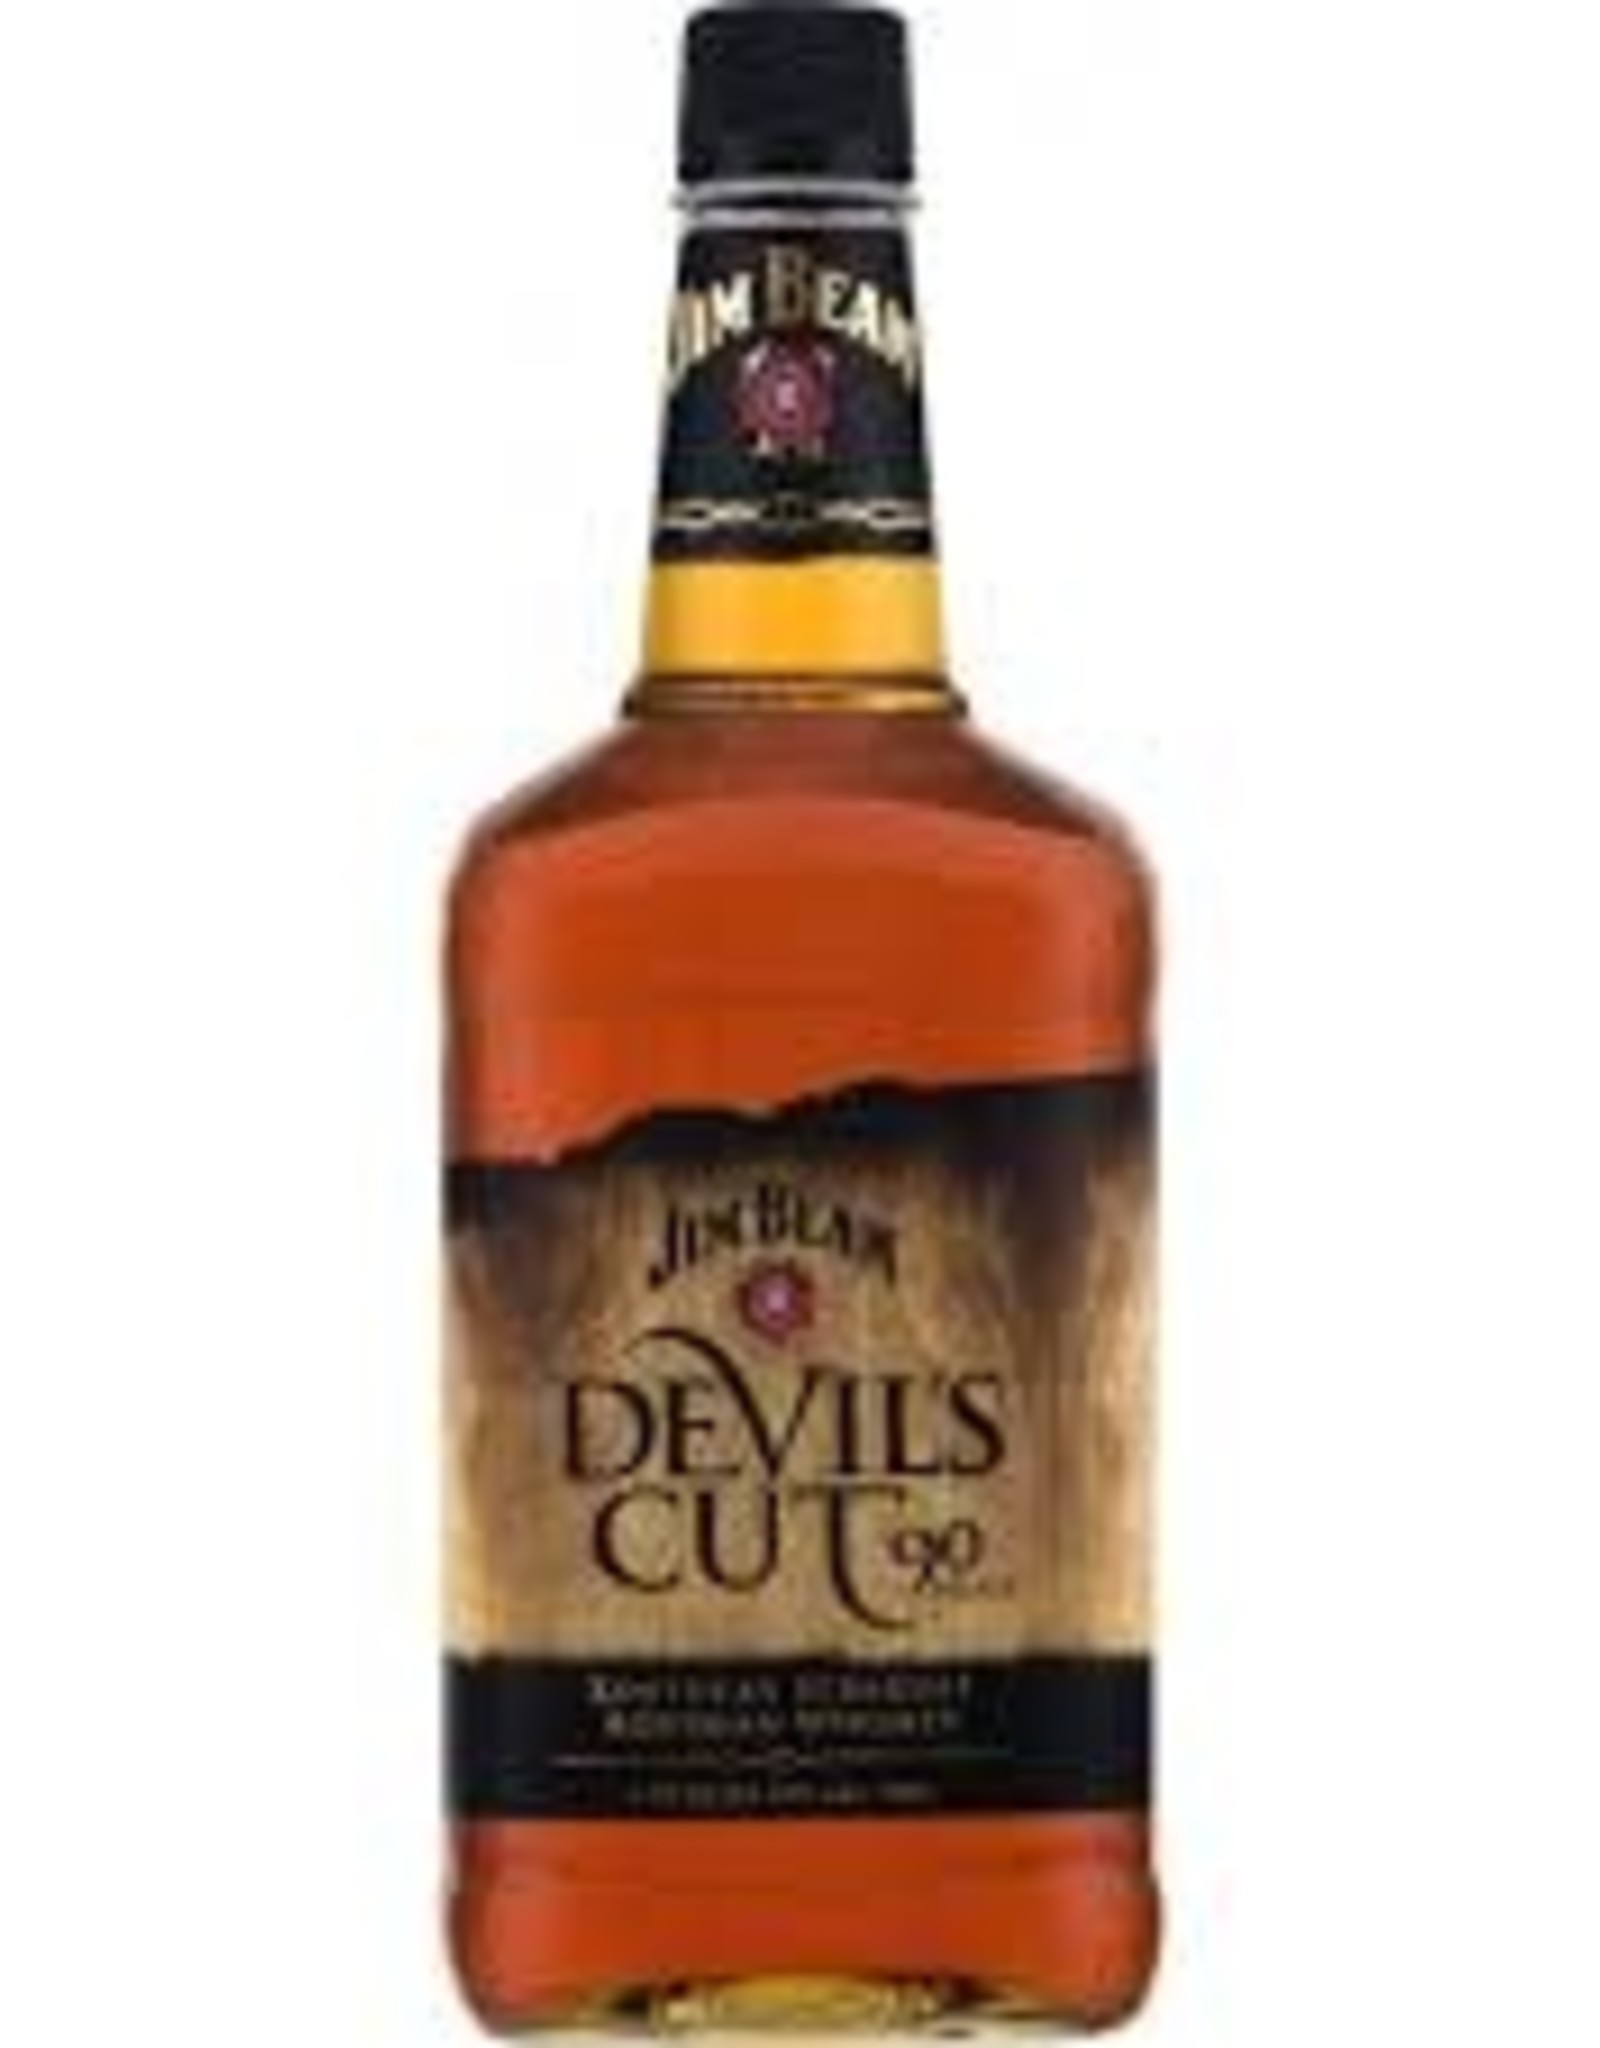 Jim Beam Jim Beam Devil's Cut Bourbon